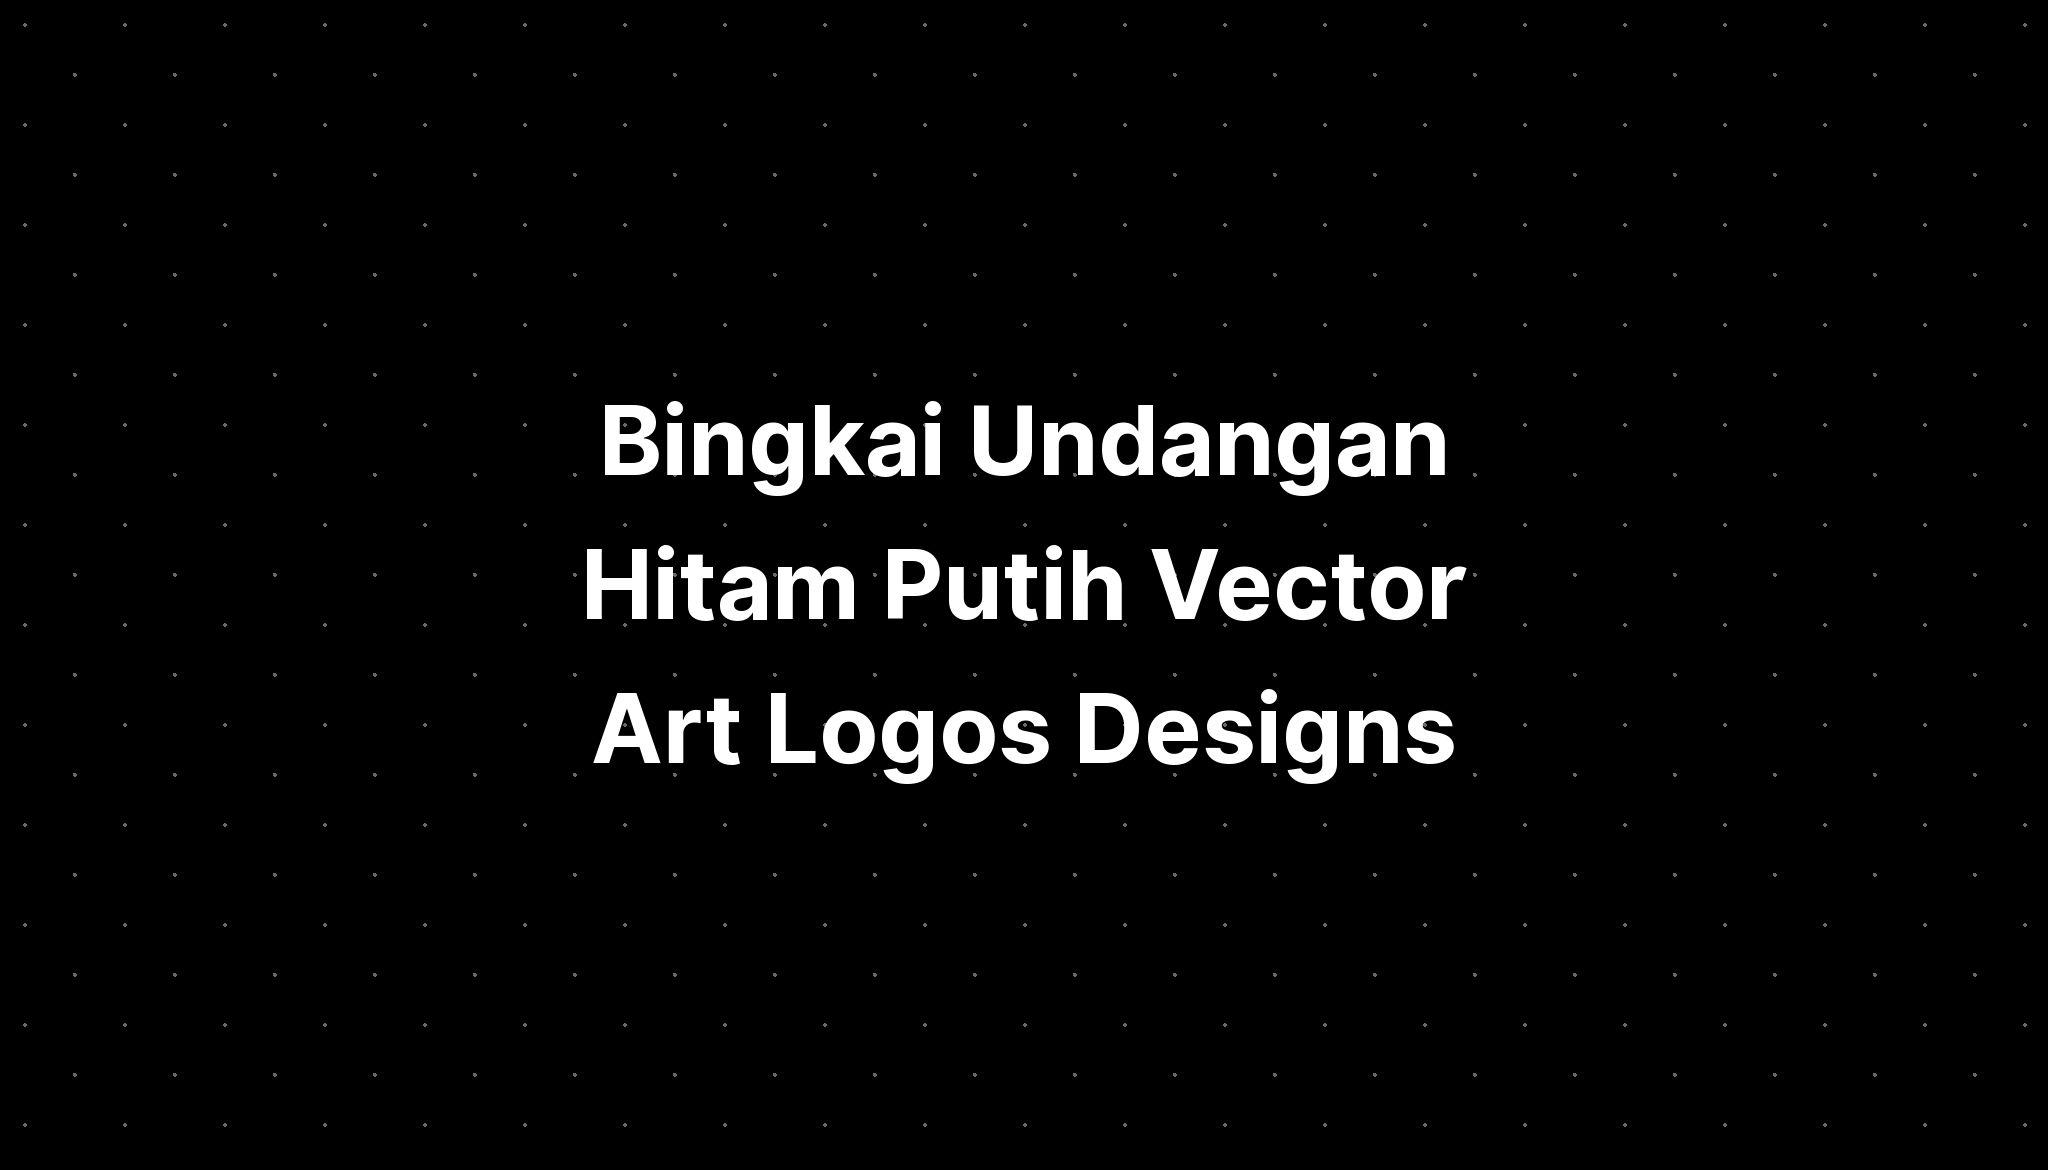 Bingkai Undangan Hitam Putih Vector Art Logos Designs - IMAGESEE